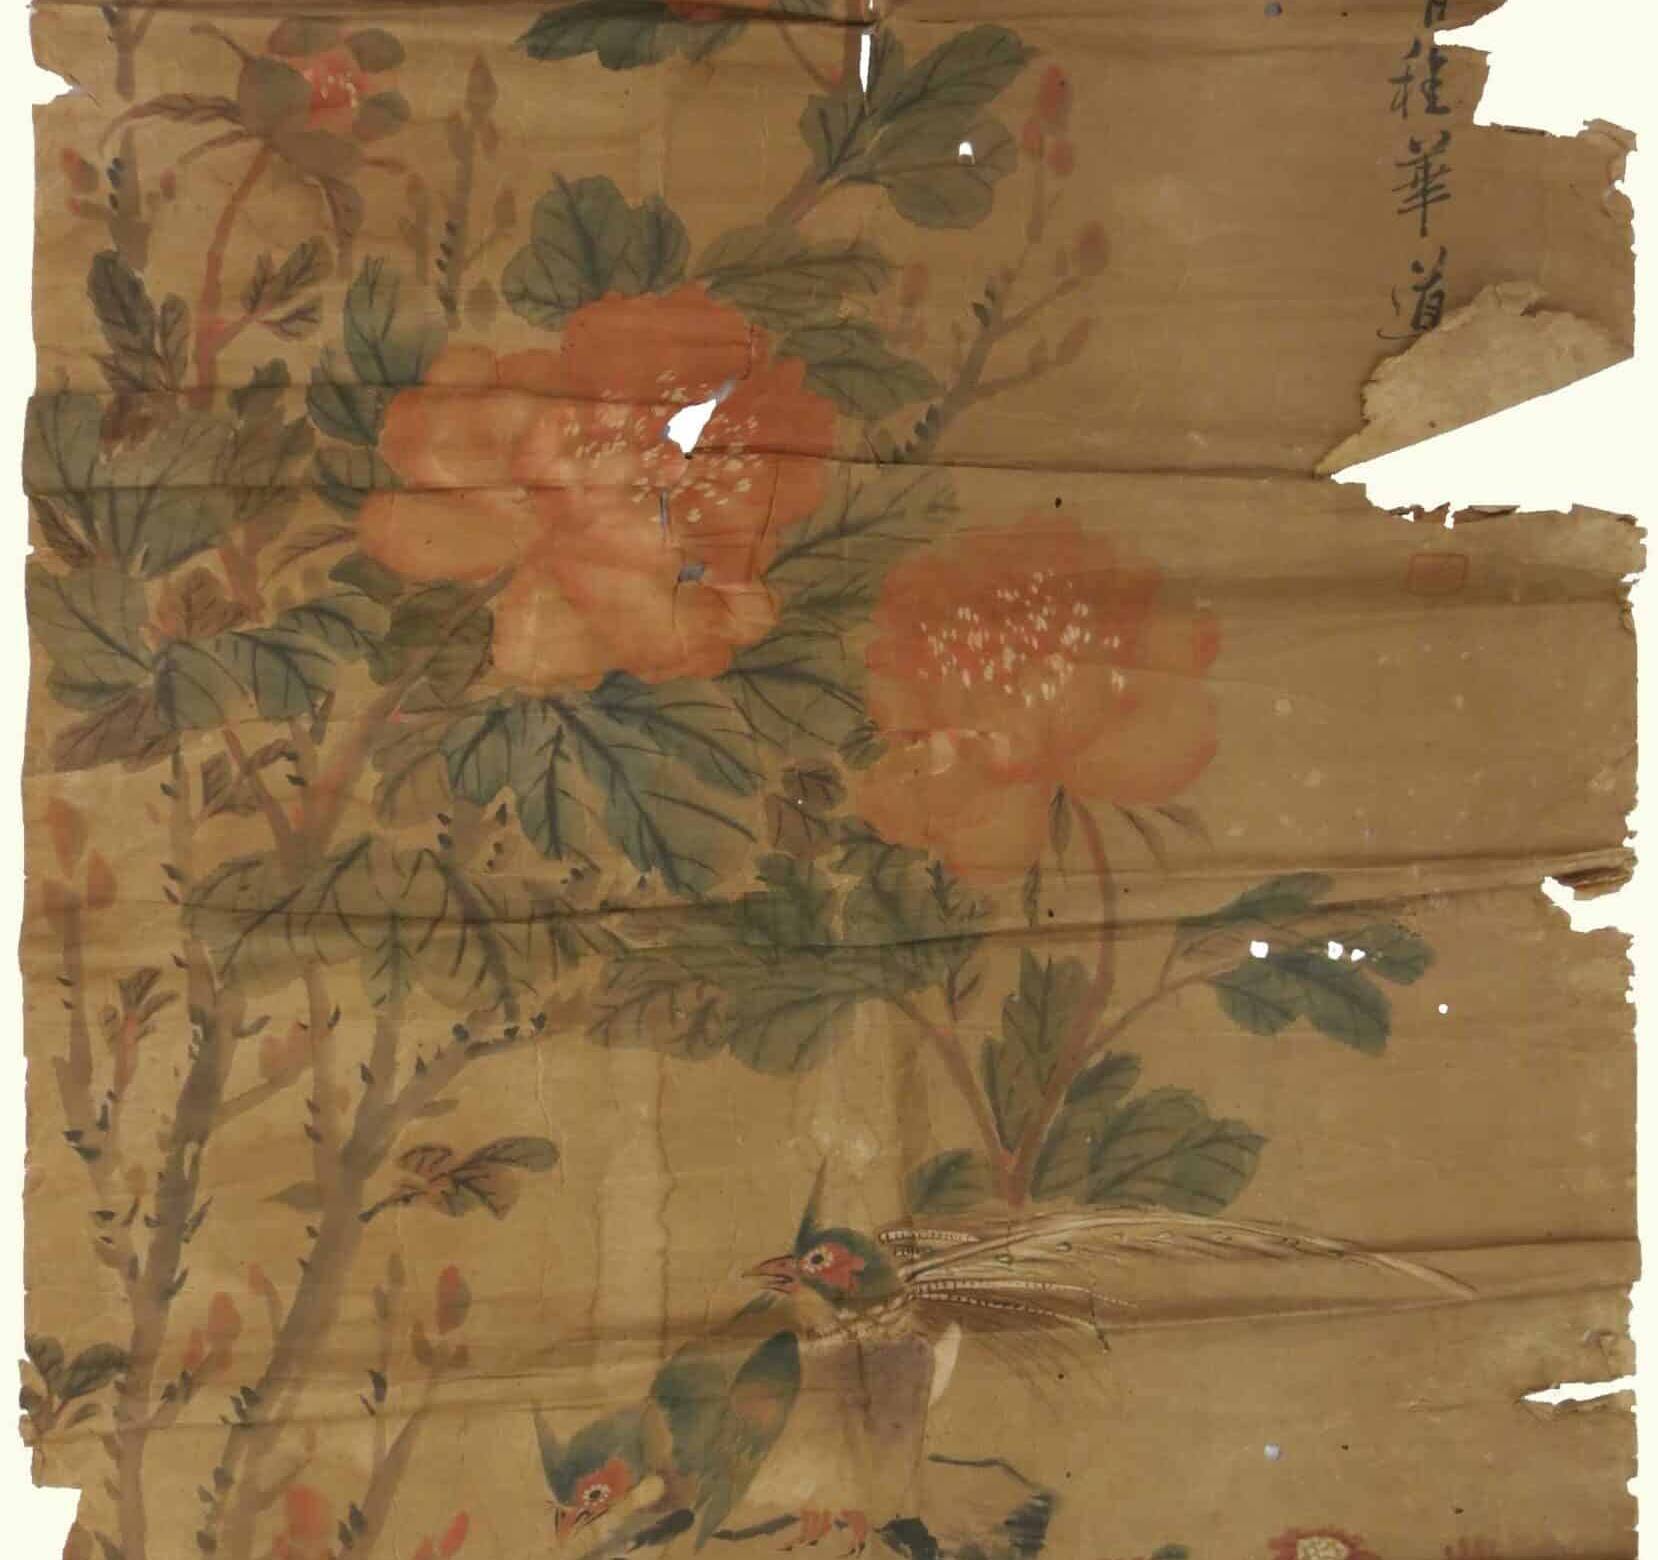 Chinese Painting Before Restoration